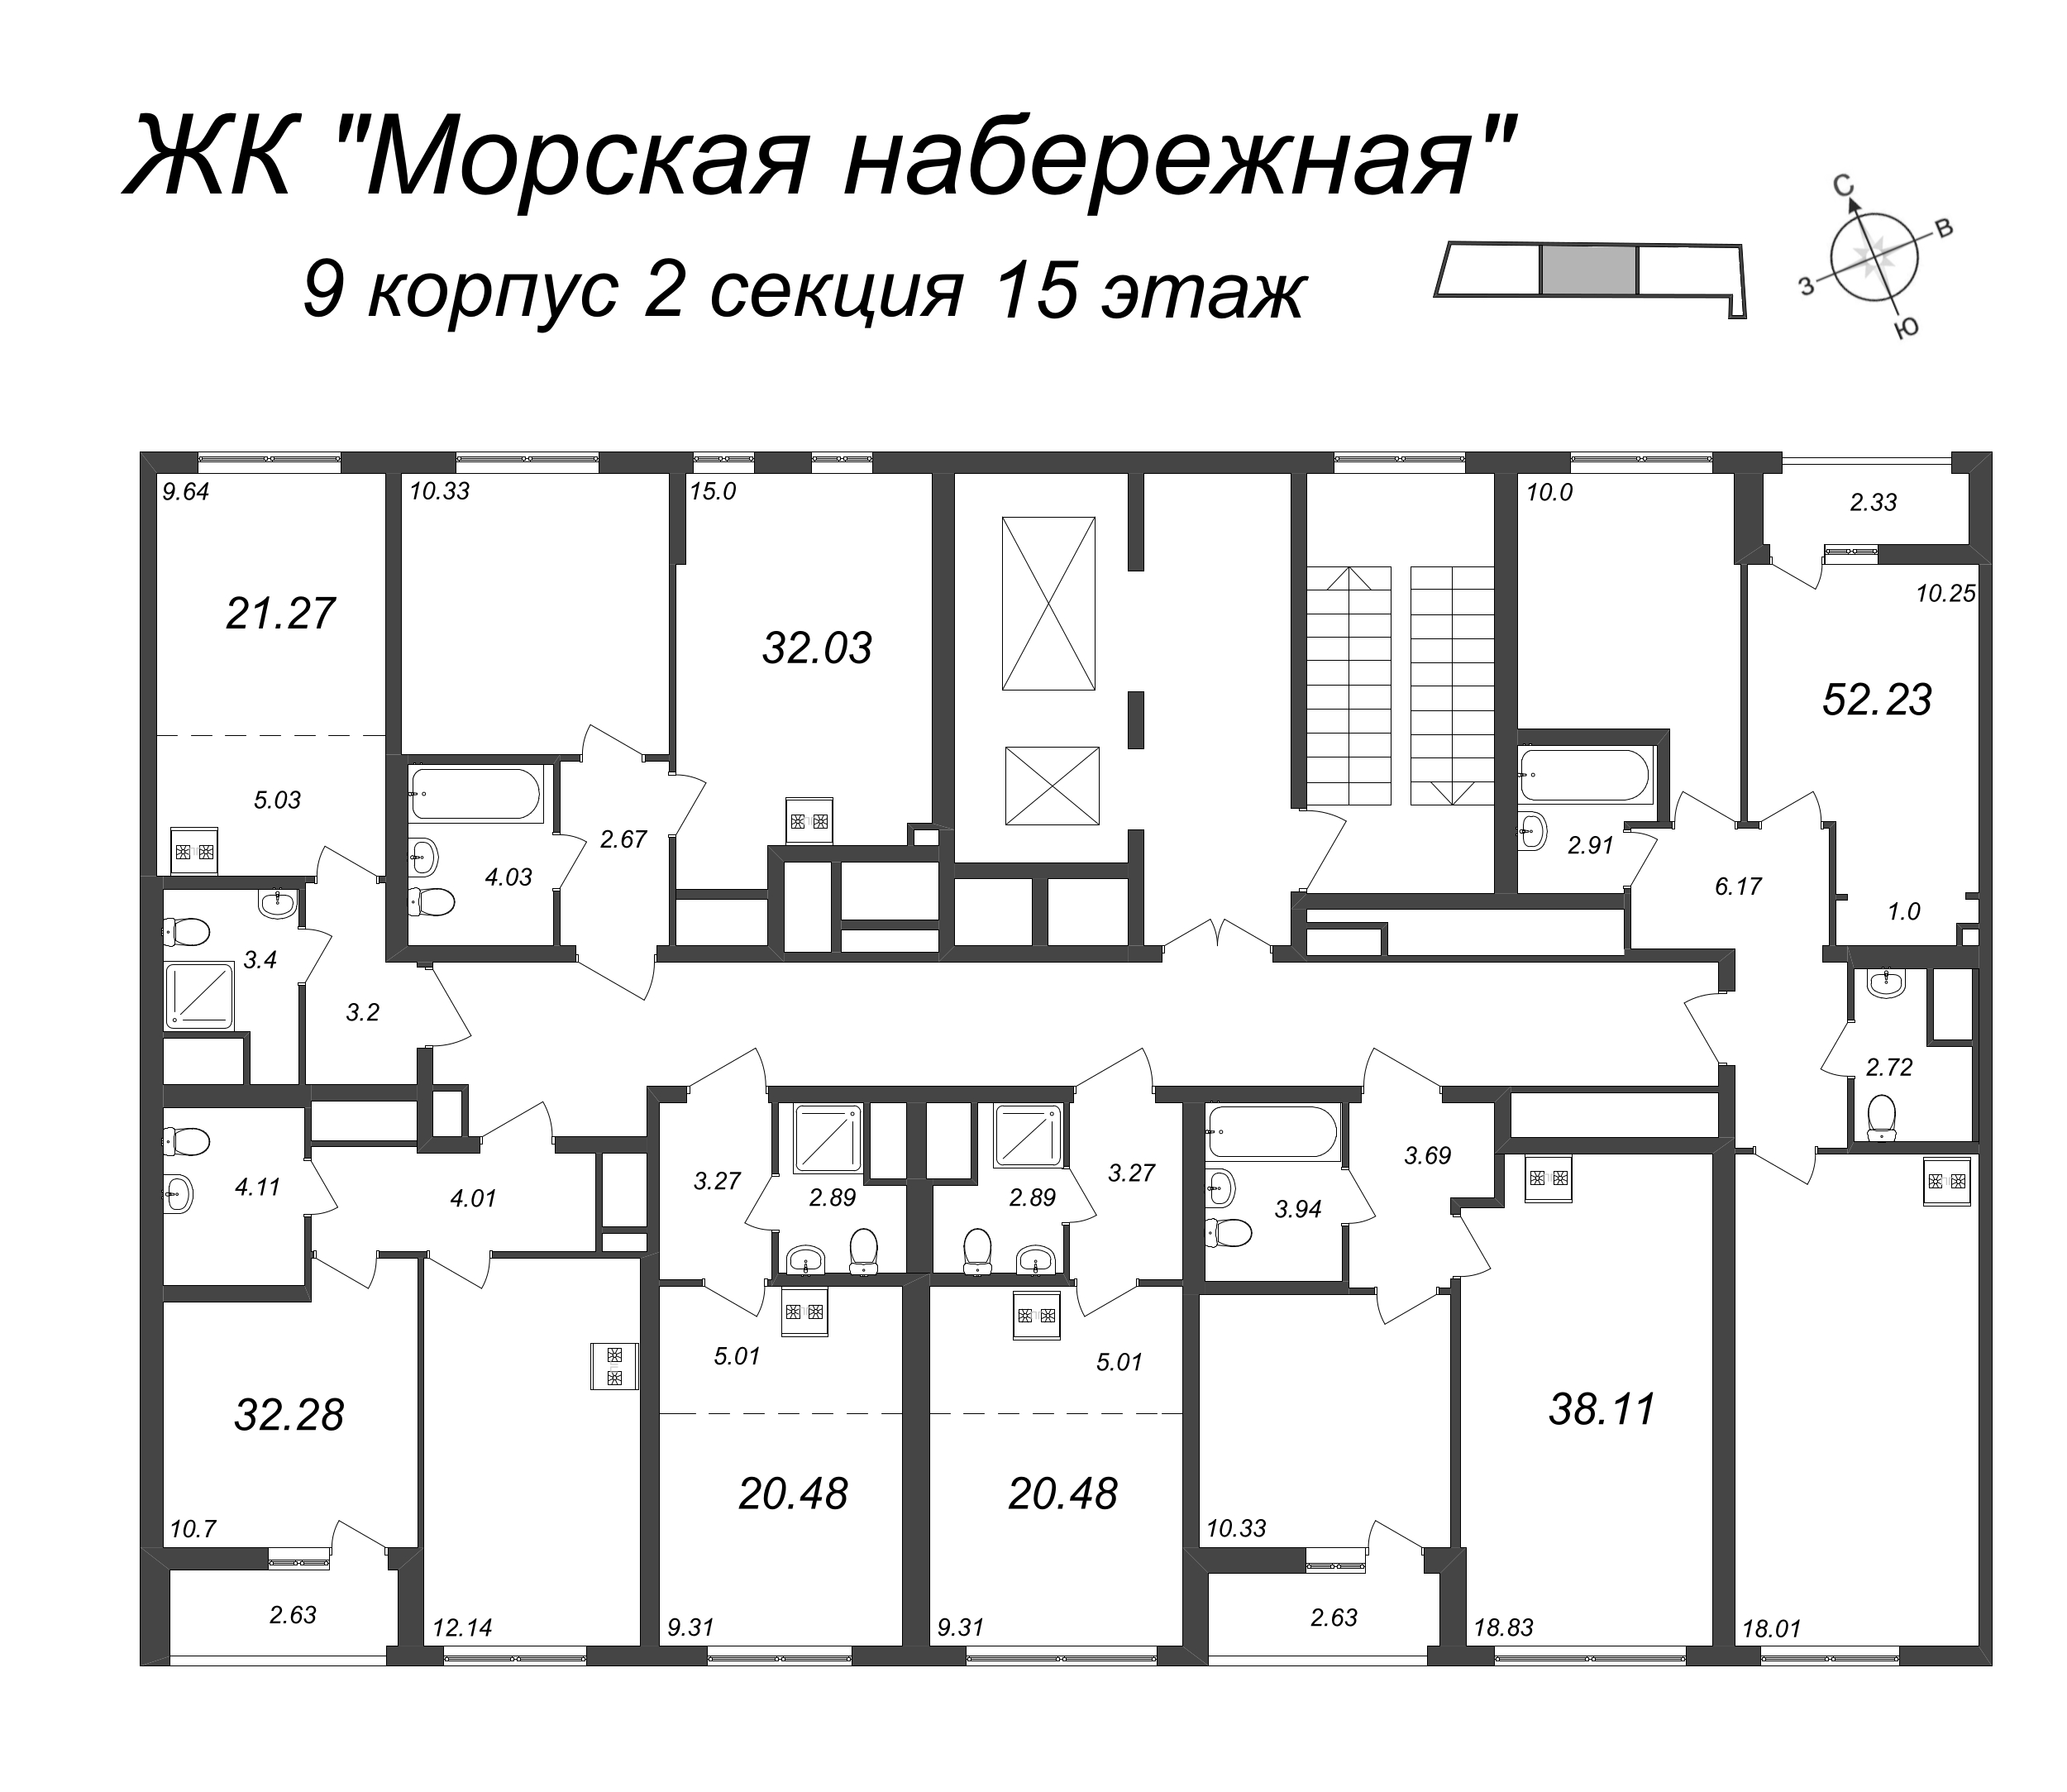 2-комнатная (Евро) квартира, 32.03 м² - планировка этажа